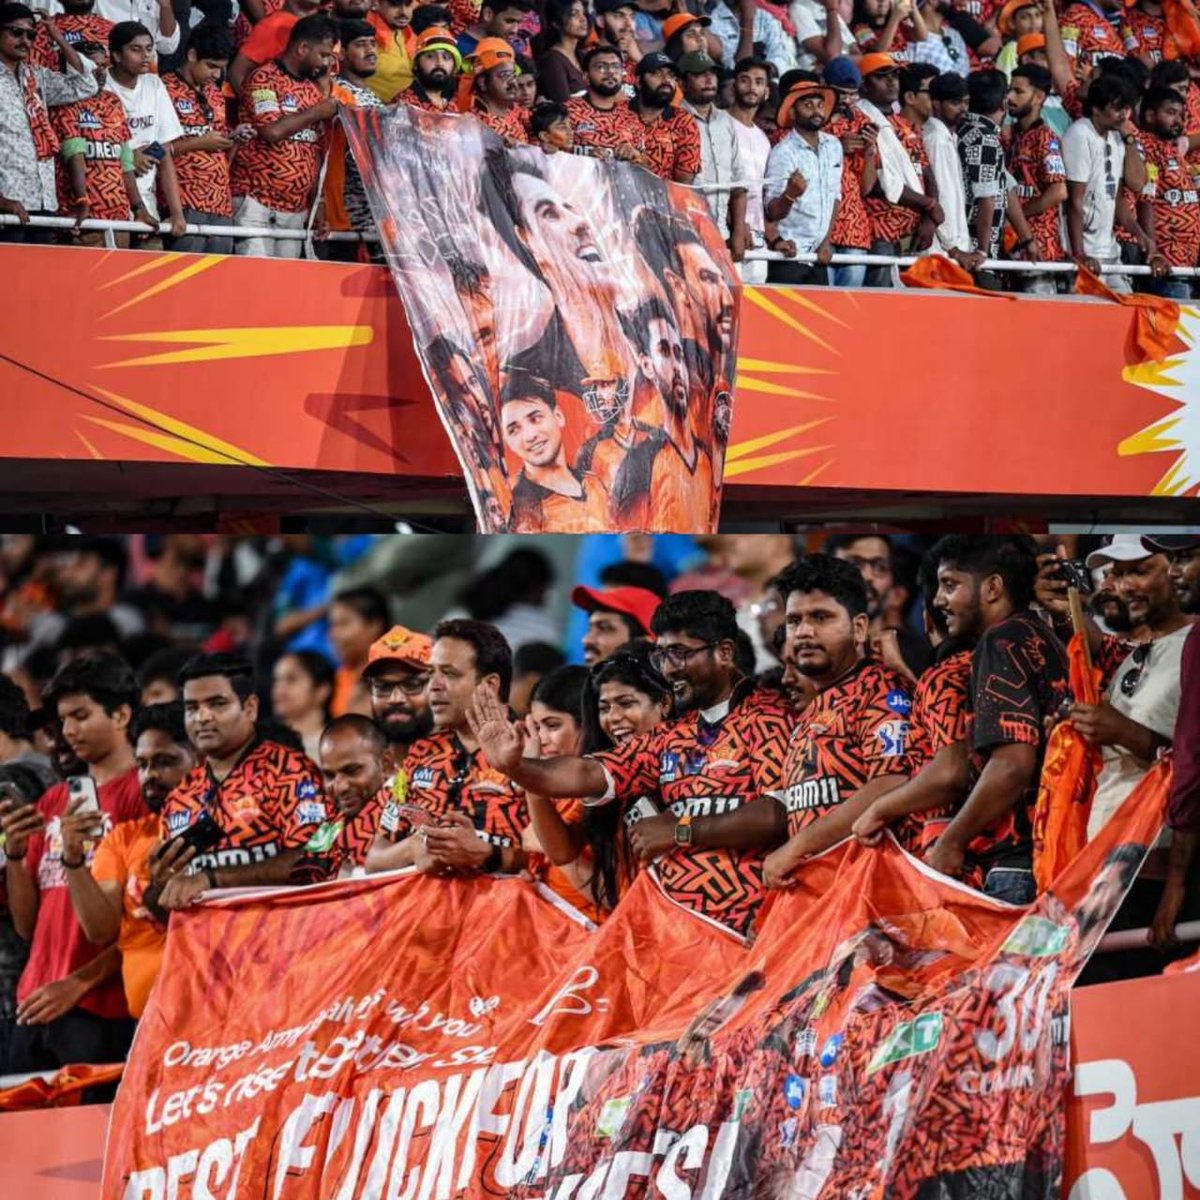 Football type atmosphere for Sunrisers Hyderabad 🤯💥